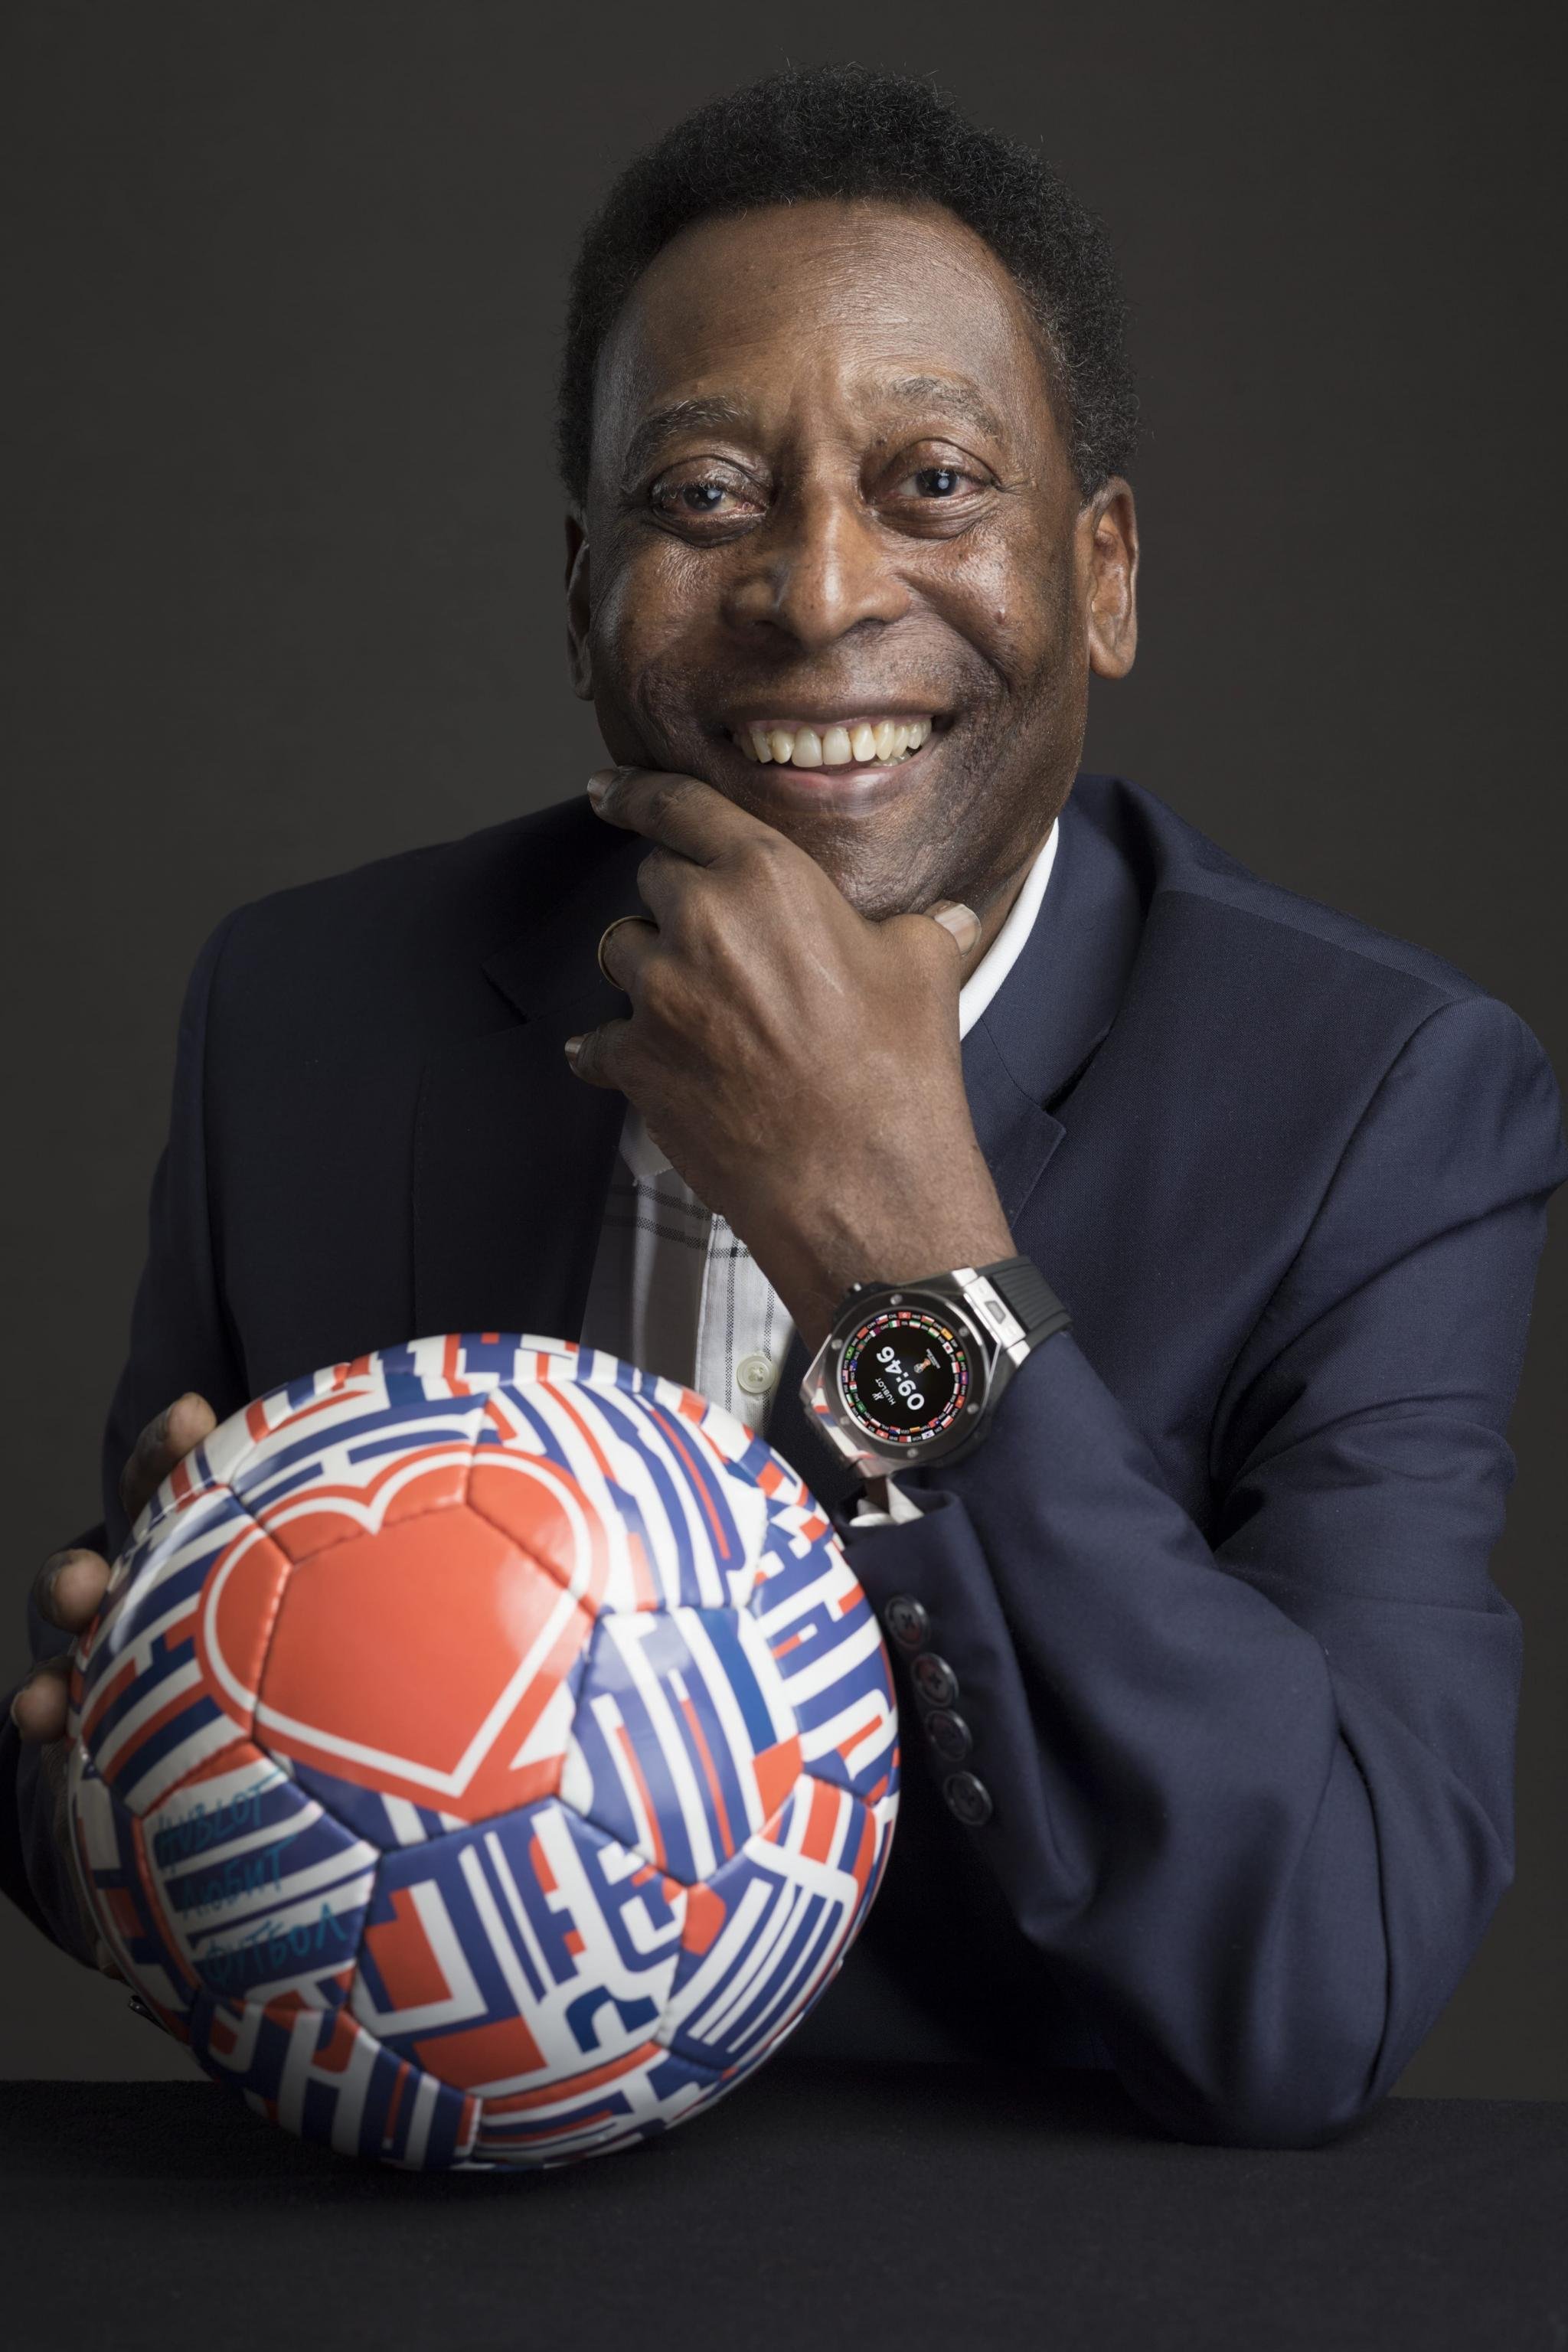 Hublot & Pelé Bring Hublot Loves Football Global Campaign to Miami -  World Red Eye